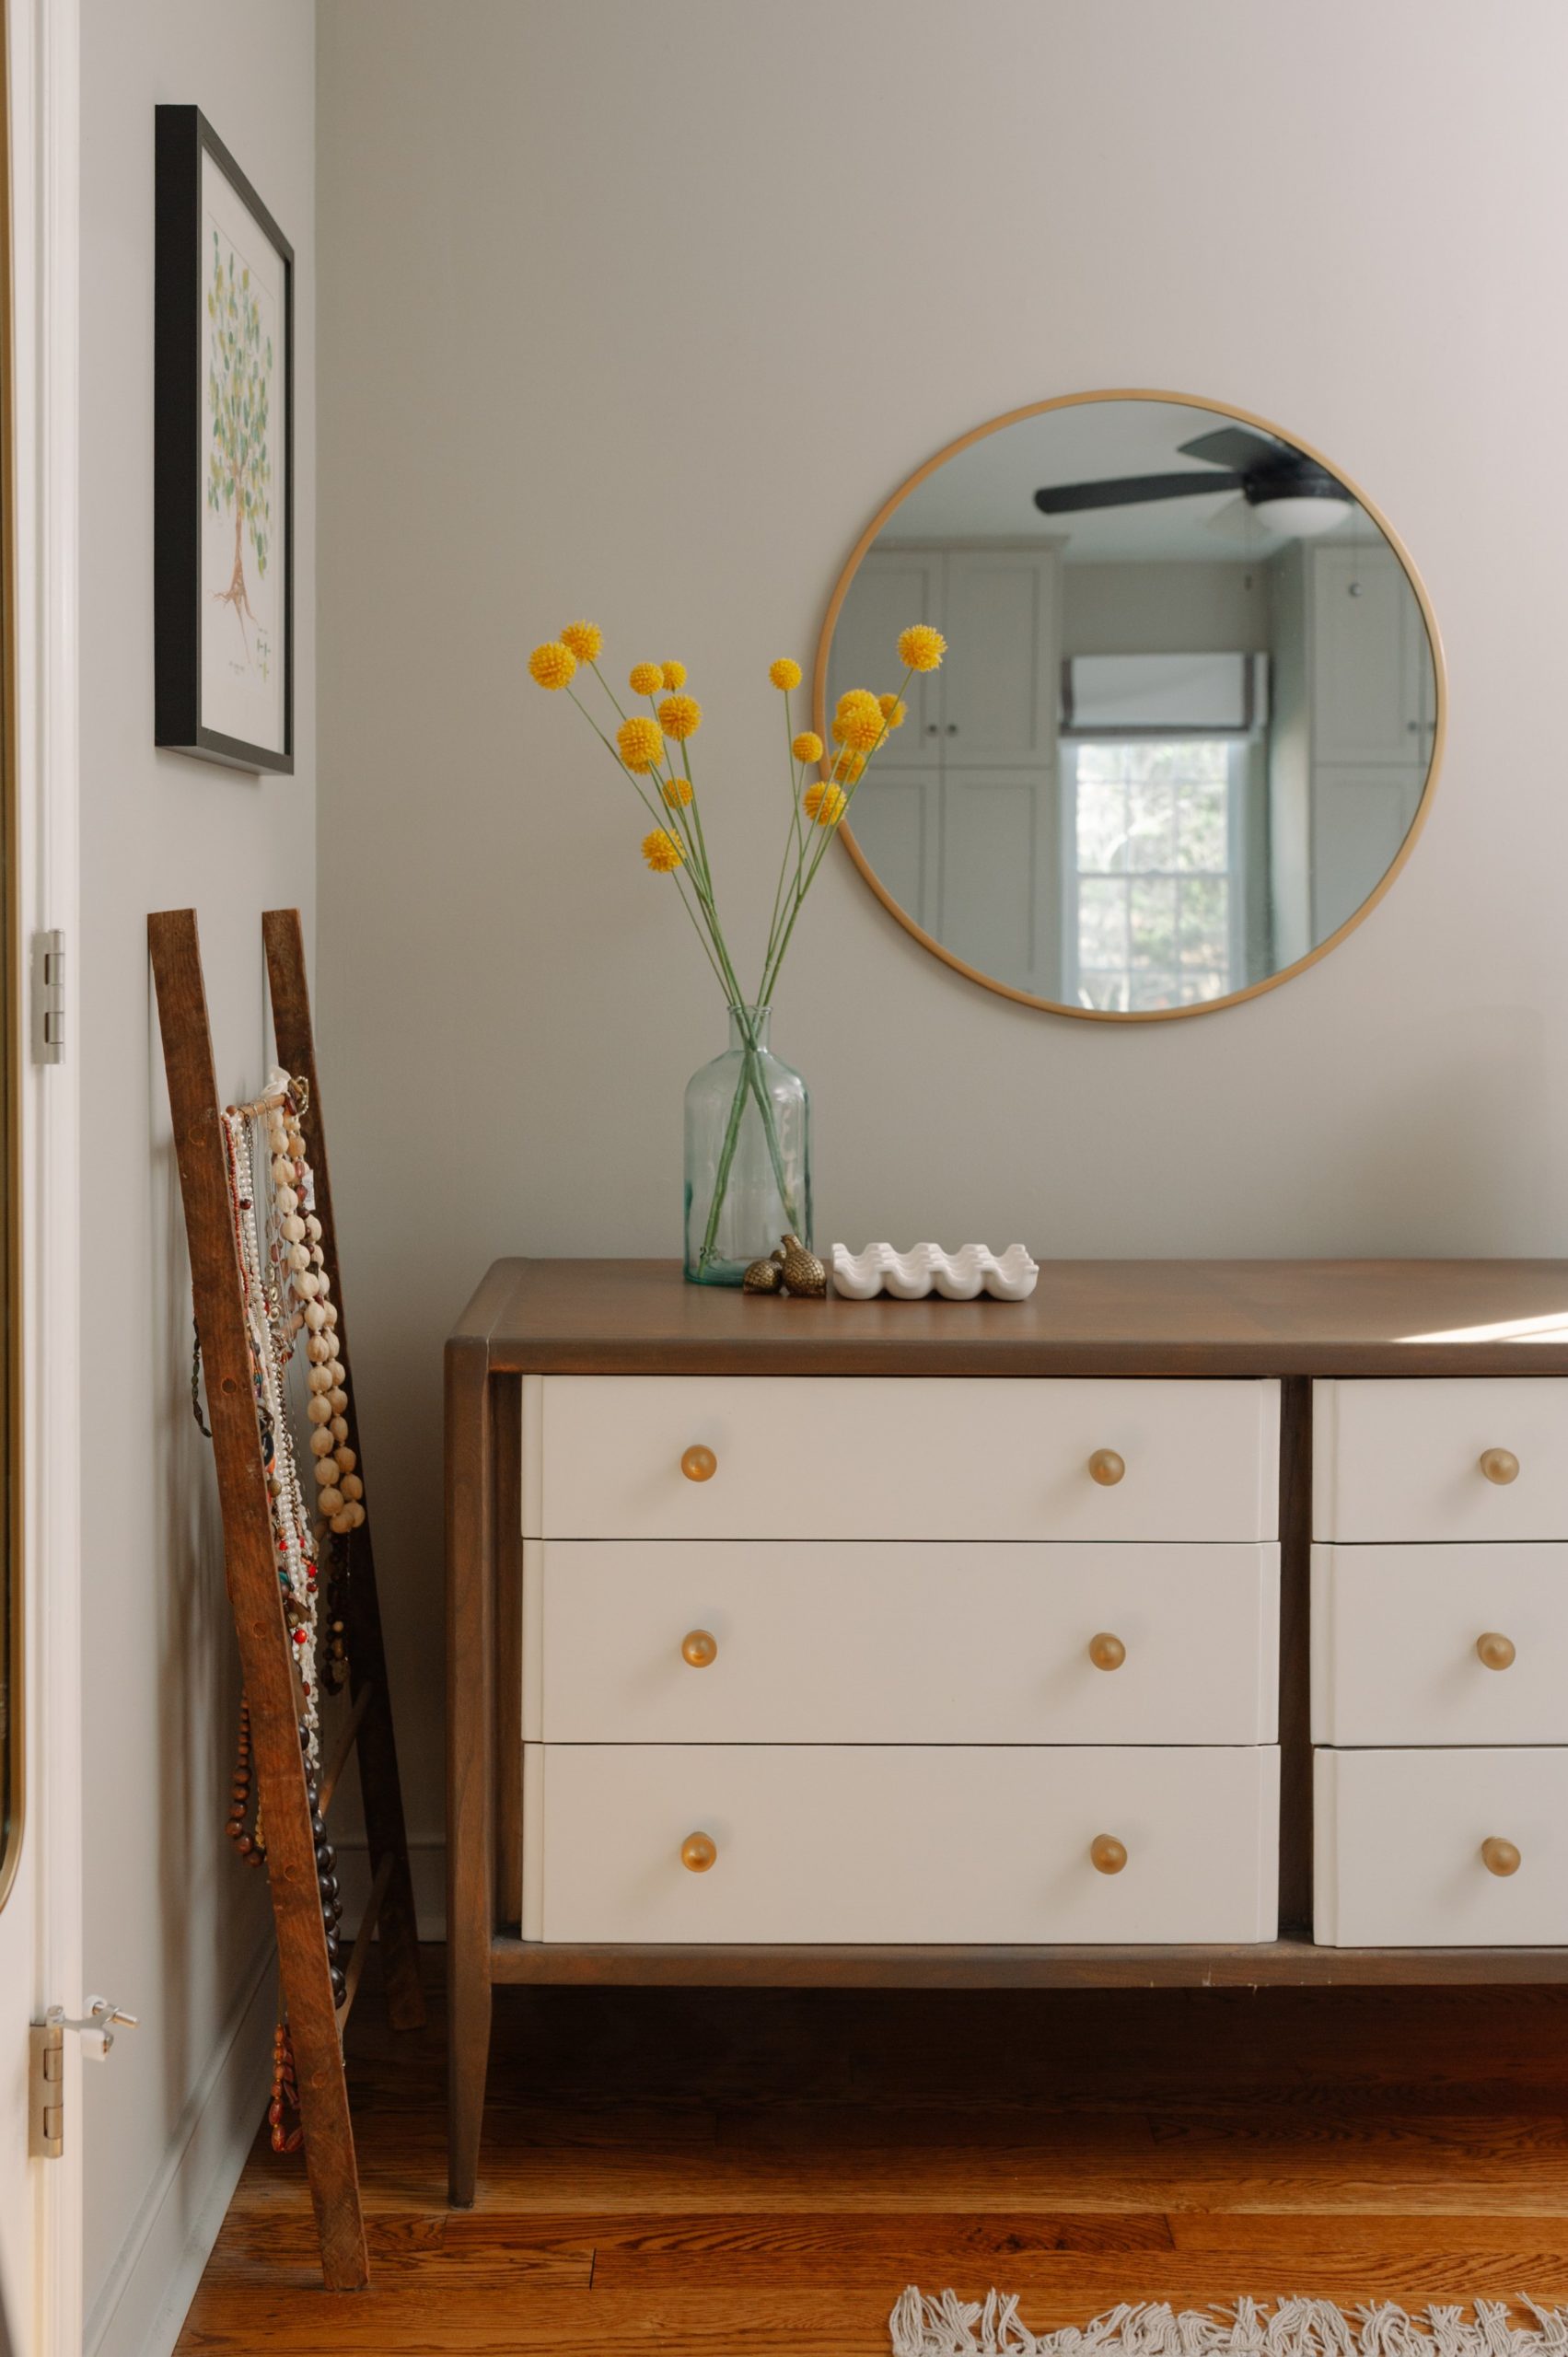 Upcycled two tone midcentury dresser, round brass mirror, yellow flowers, creative jewelry storage